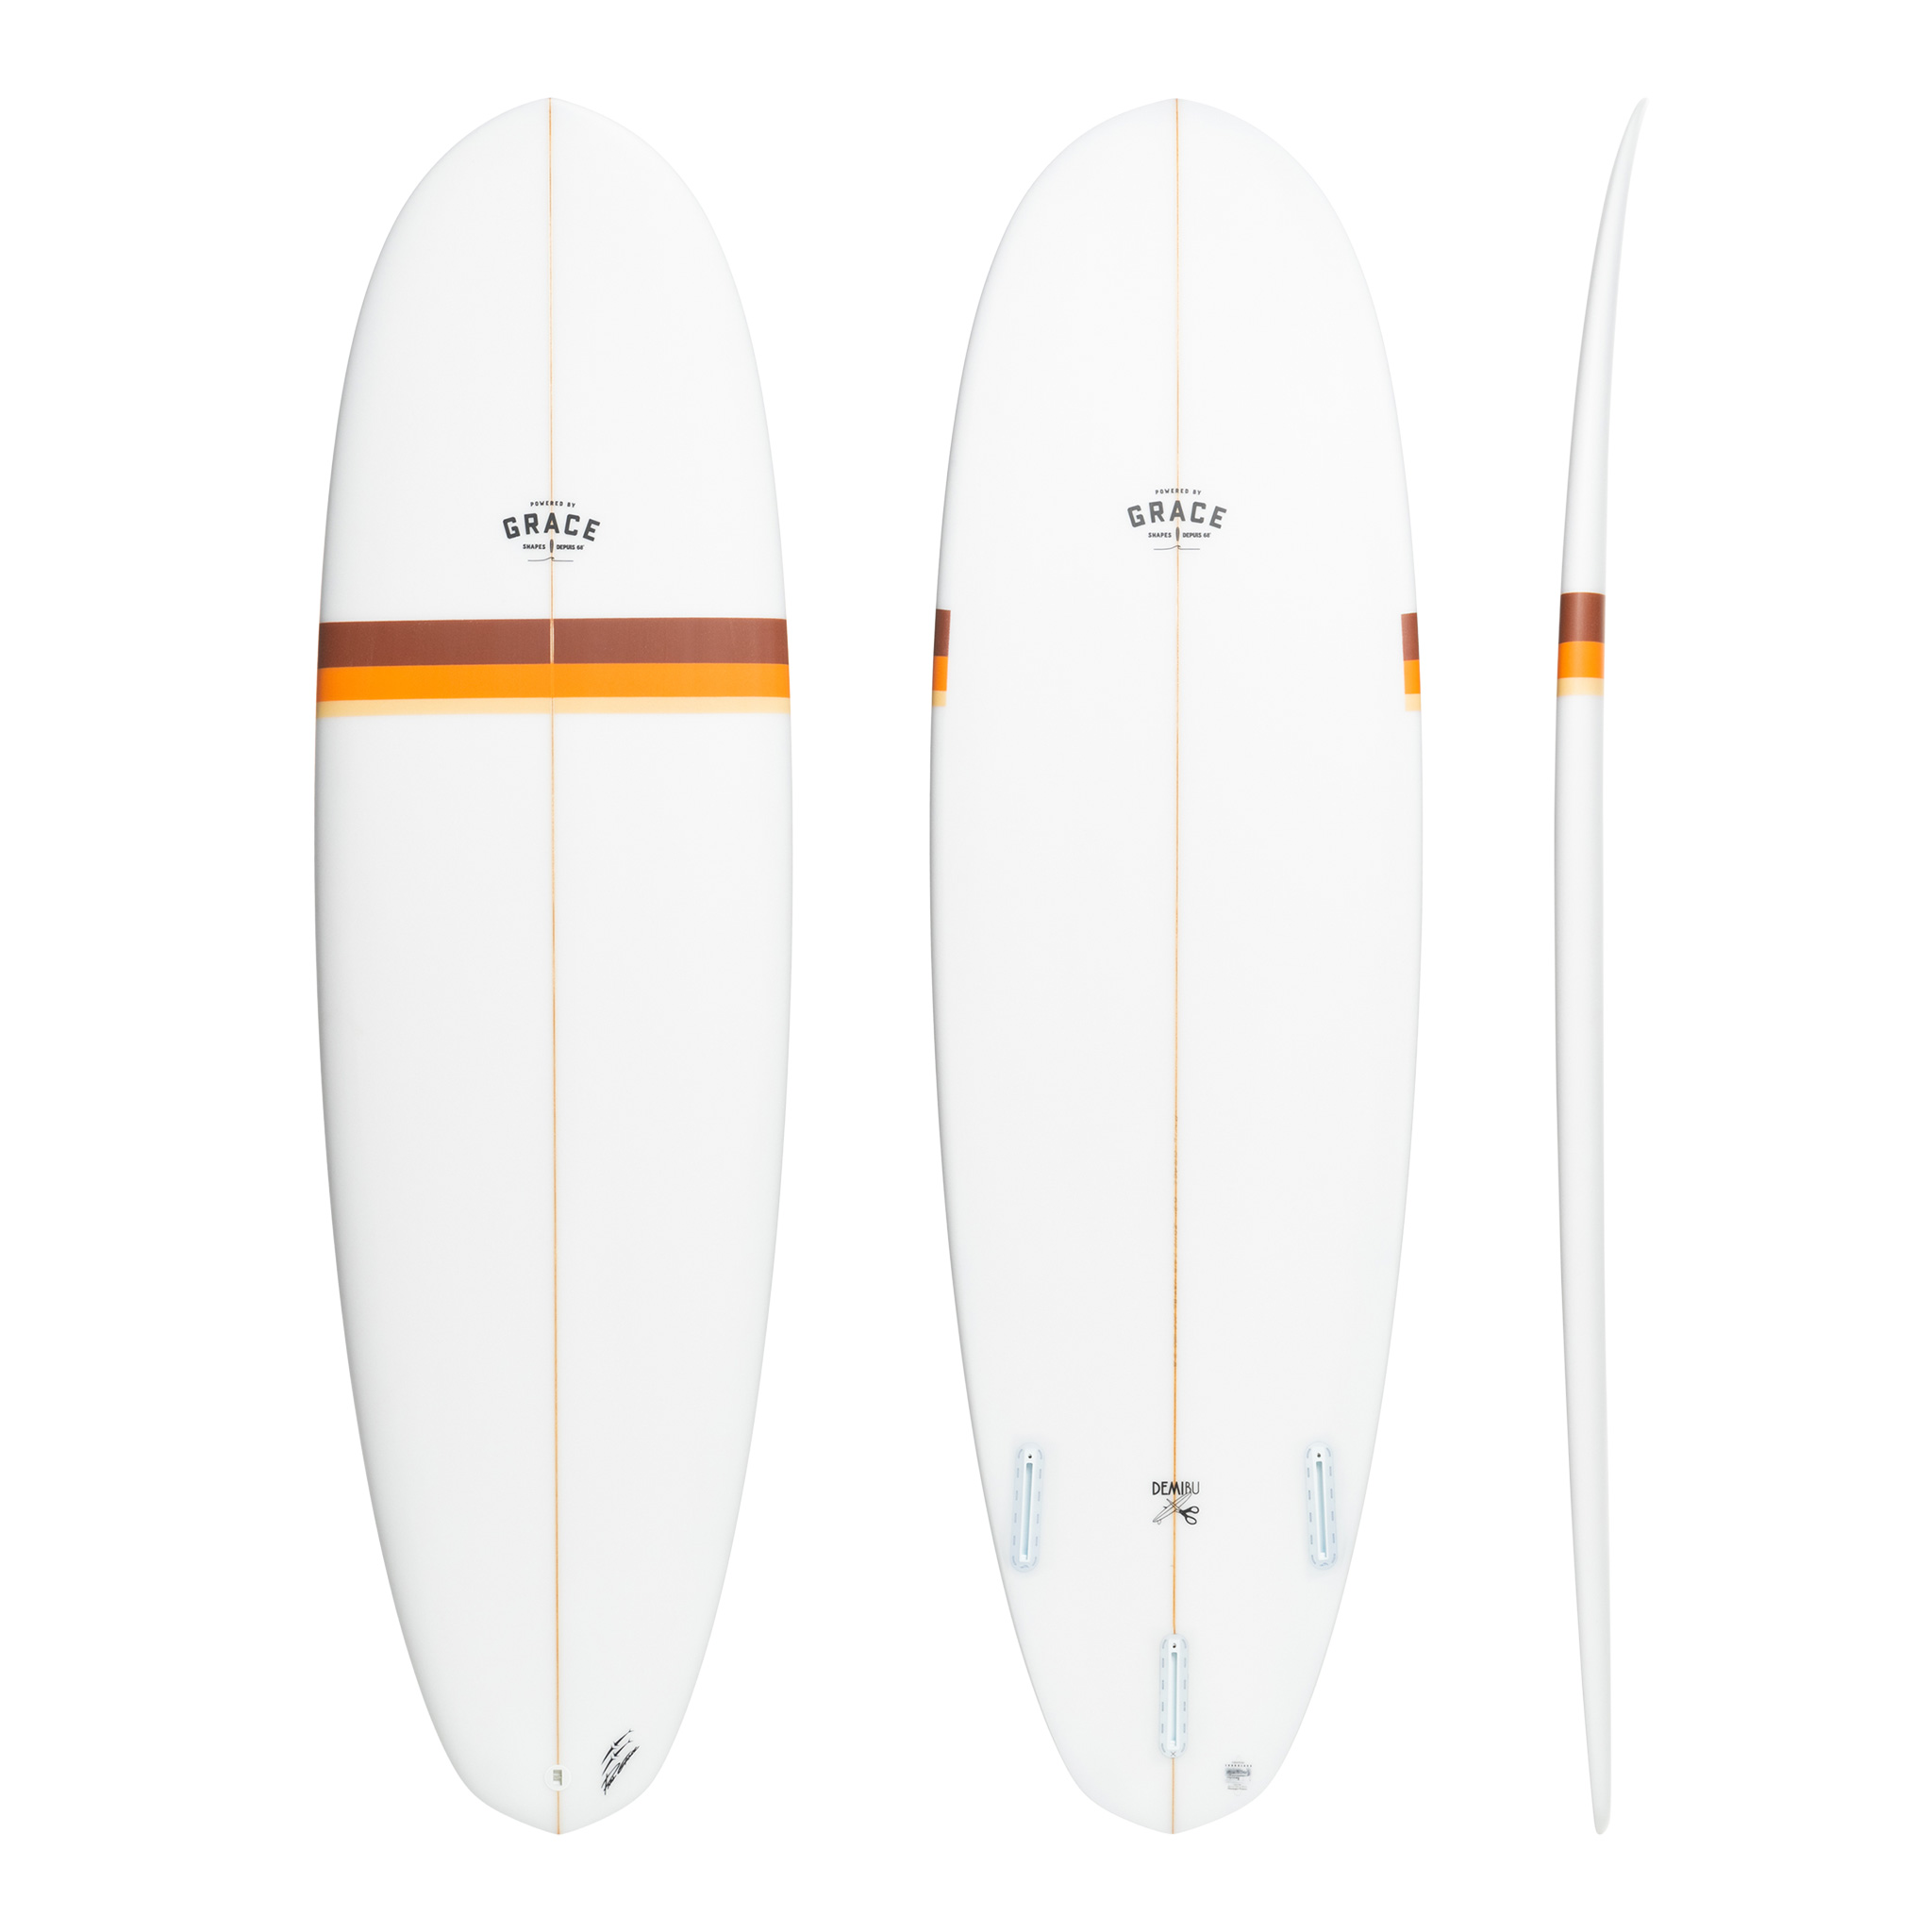 Euroglass S/S 22 Surfboards Preview